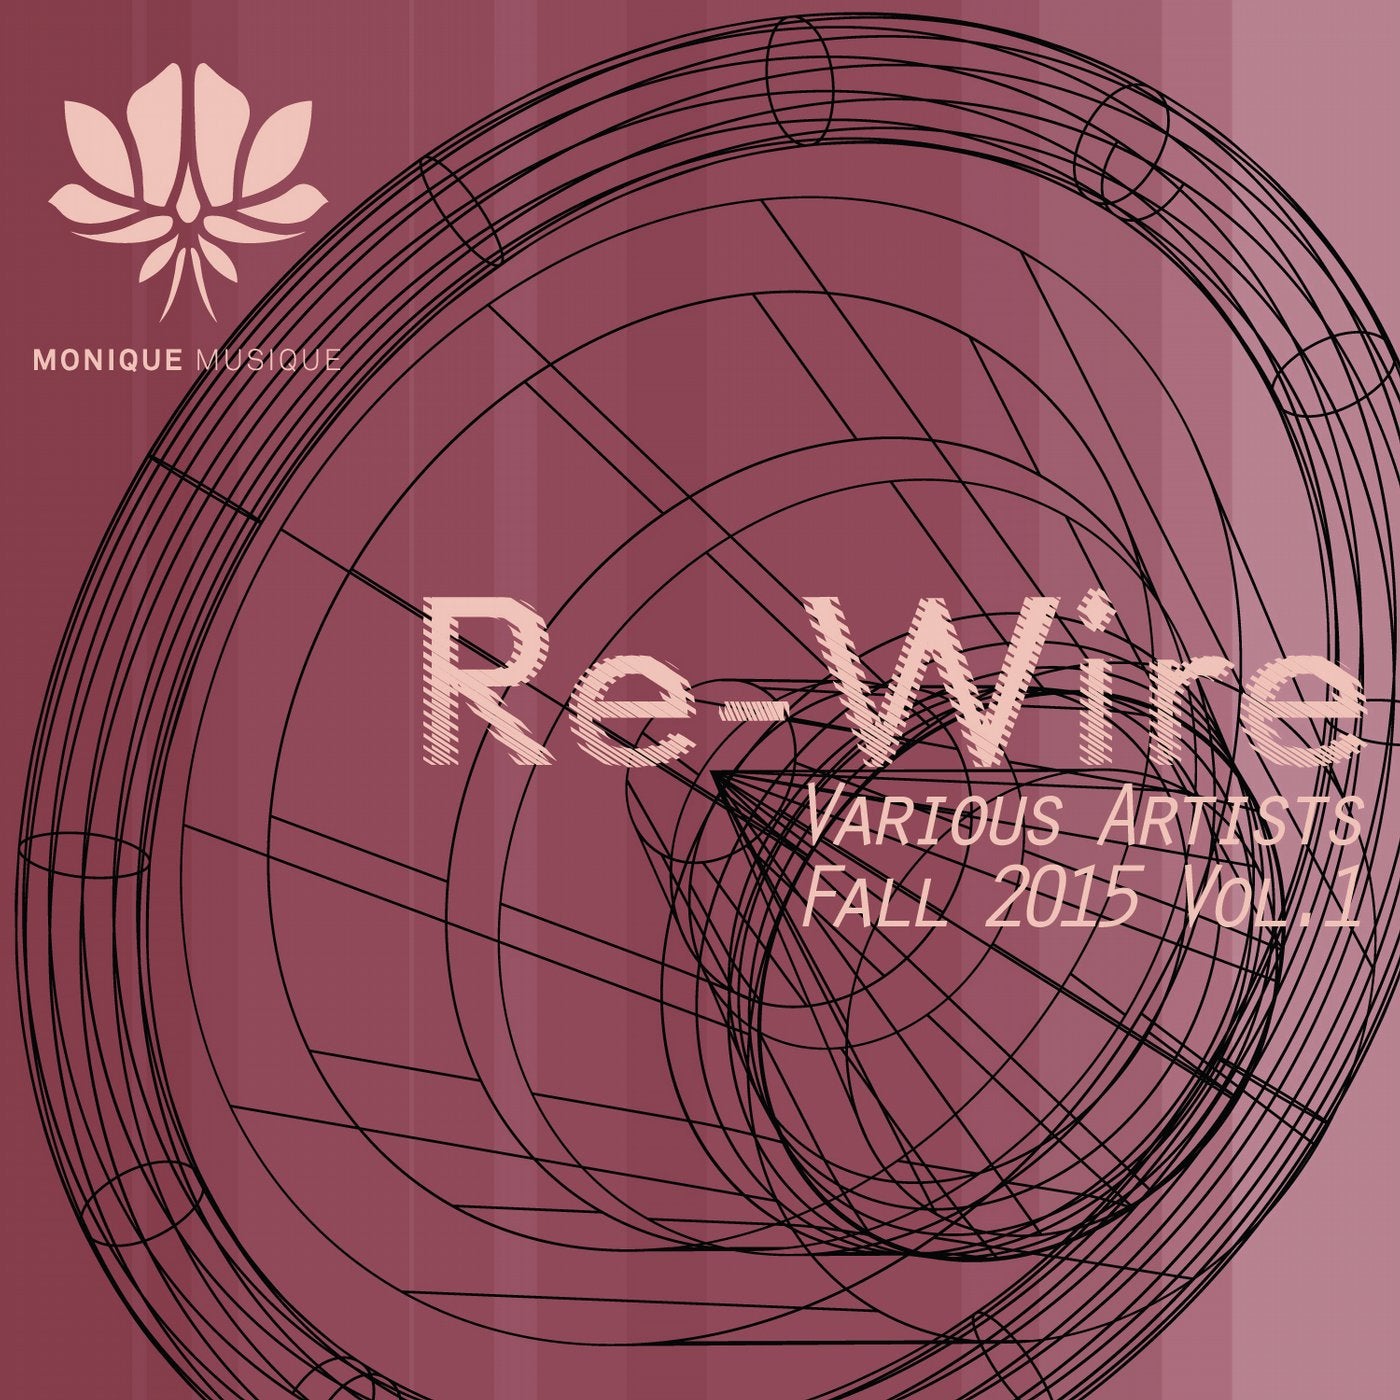 Re-Wire Fall 2015 V.A. Vol.1